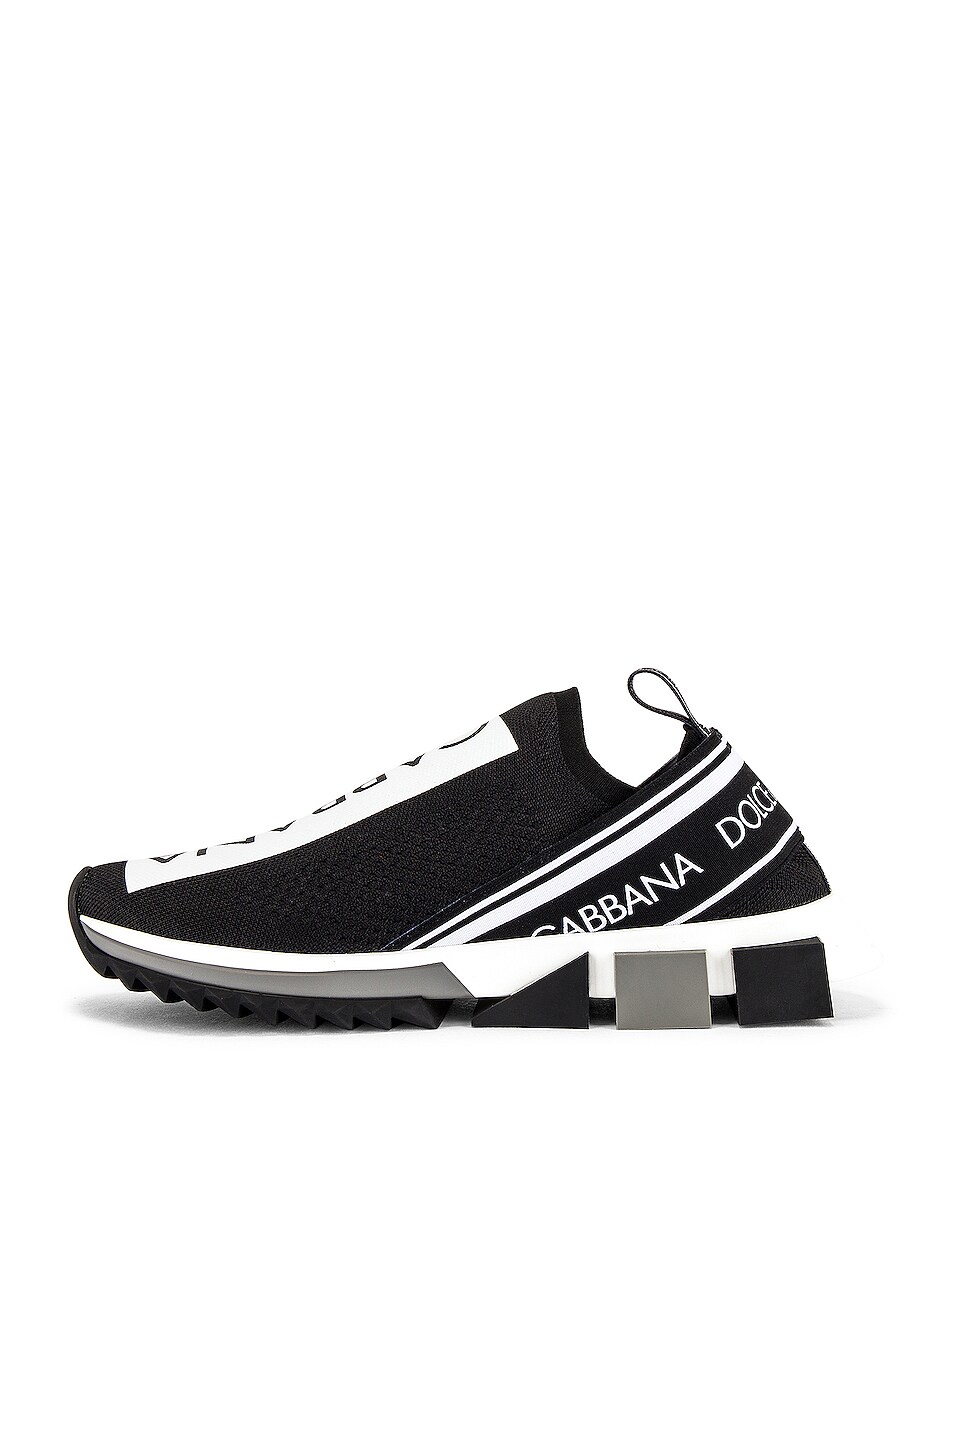 Dolce & Gabbana Low Top Sneaker in Black & White | FWRD